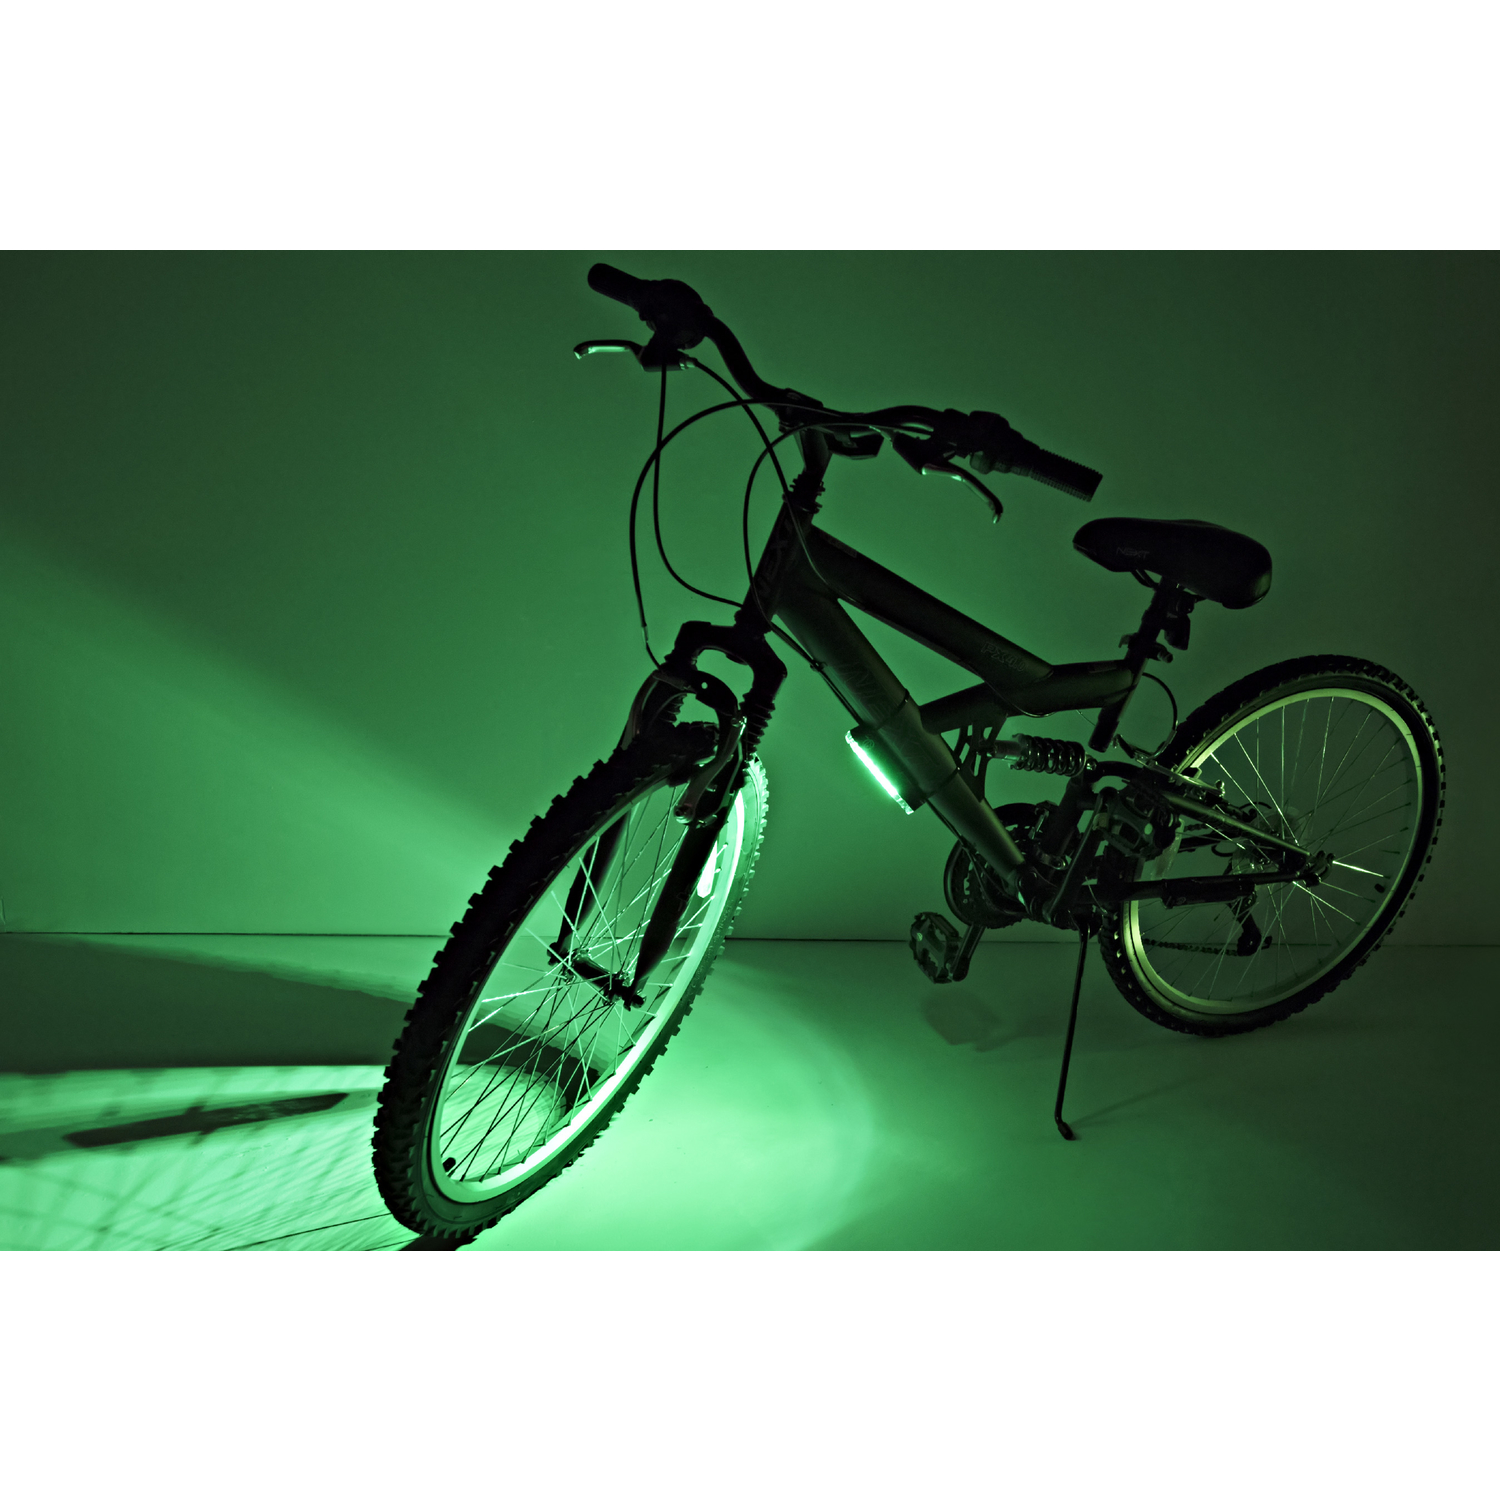 ace bike lights